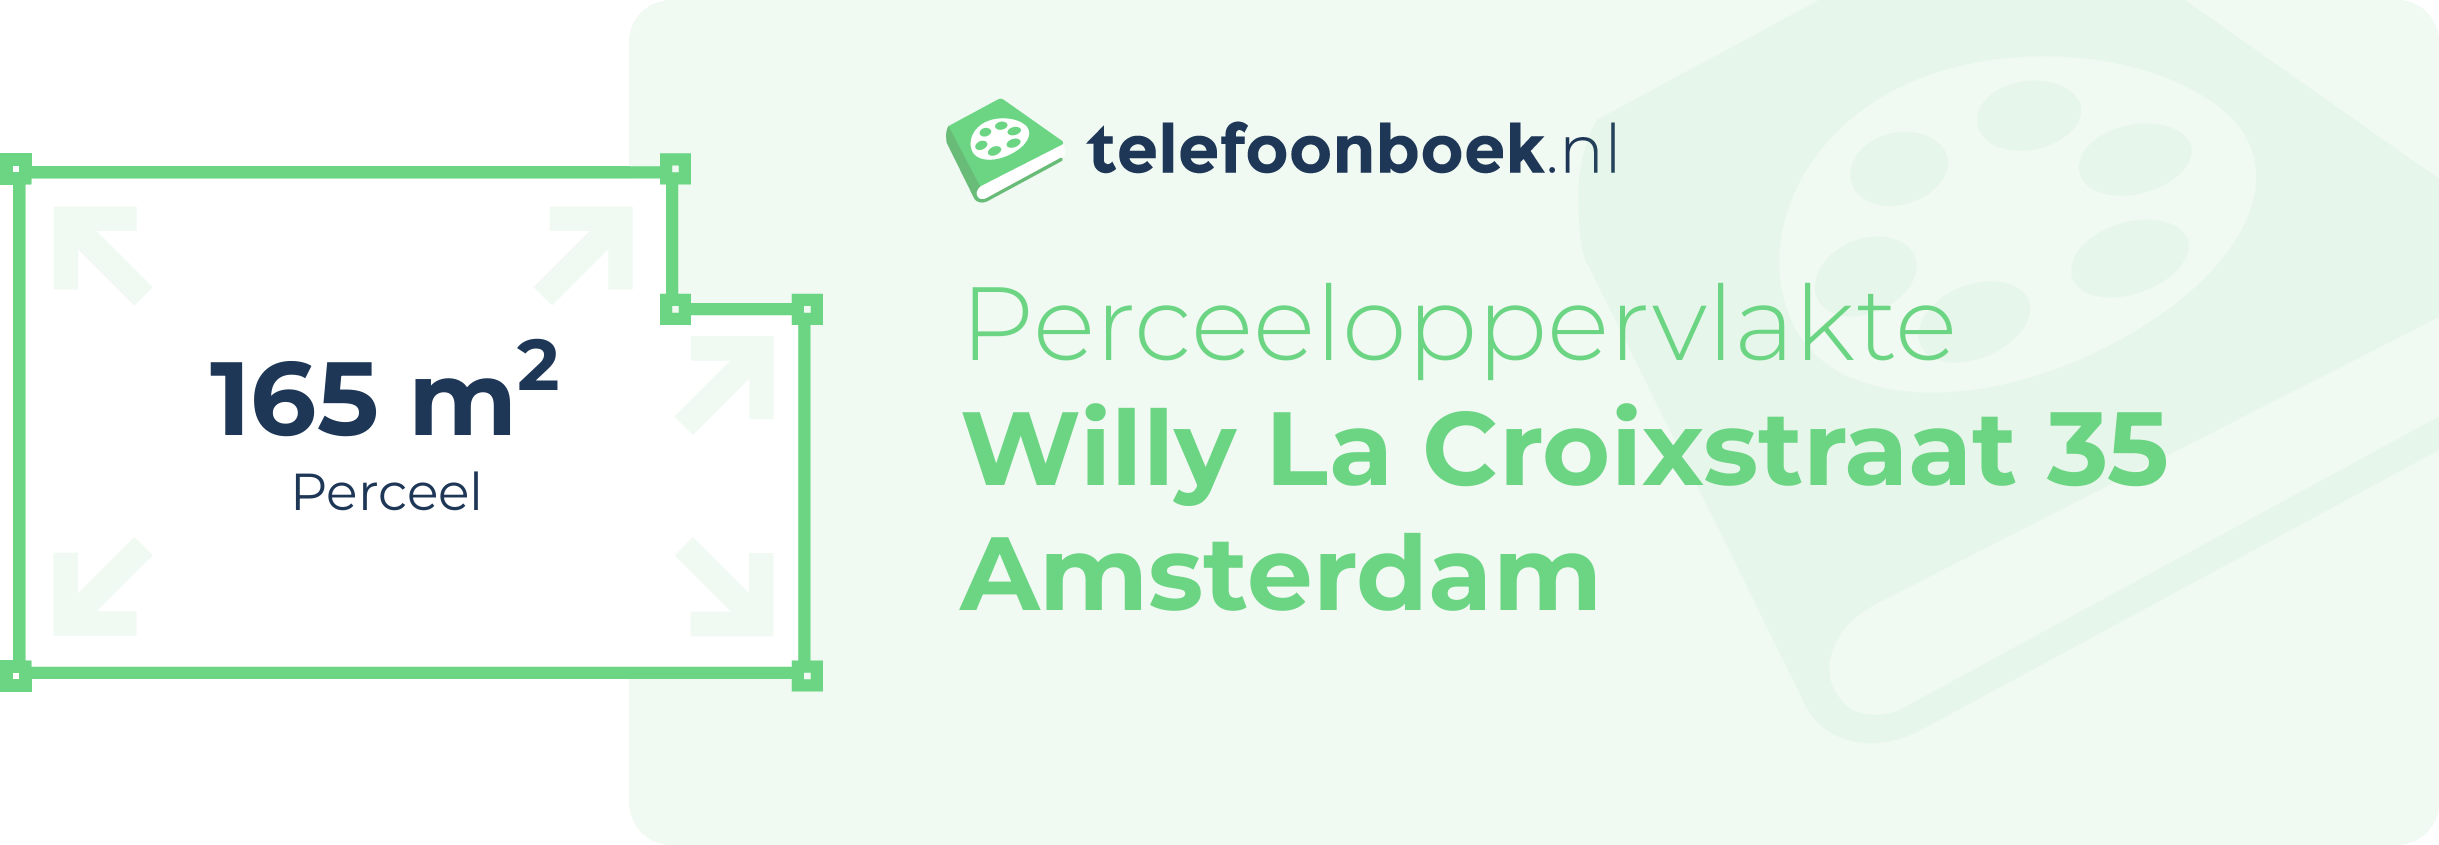 Perceeloppervlakte Willy La Croixstraat 35 Amsterdam